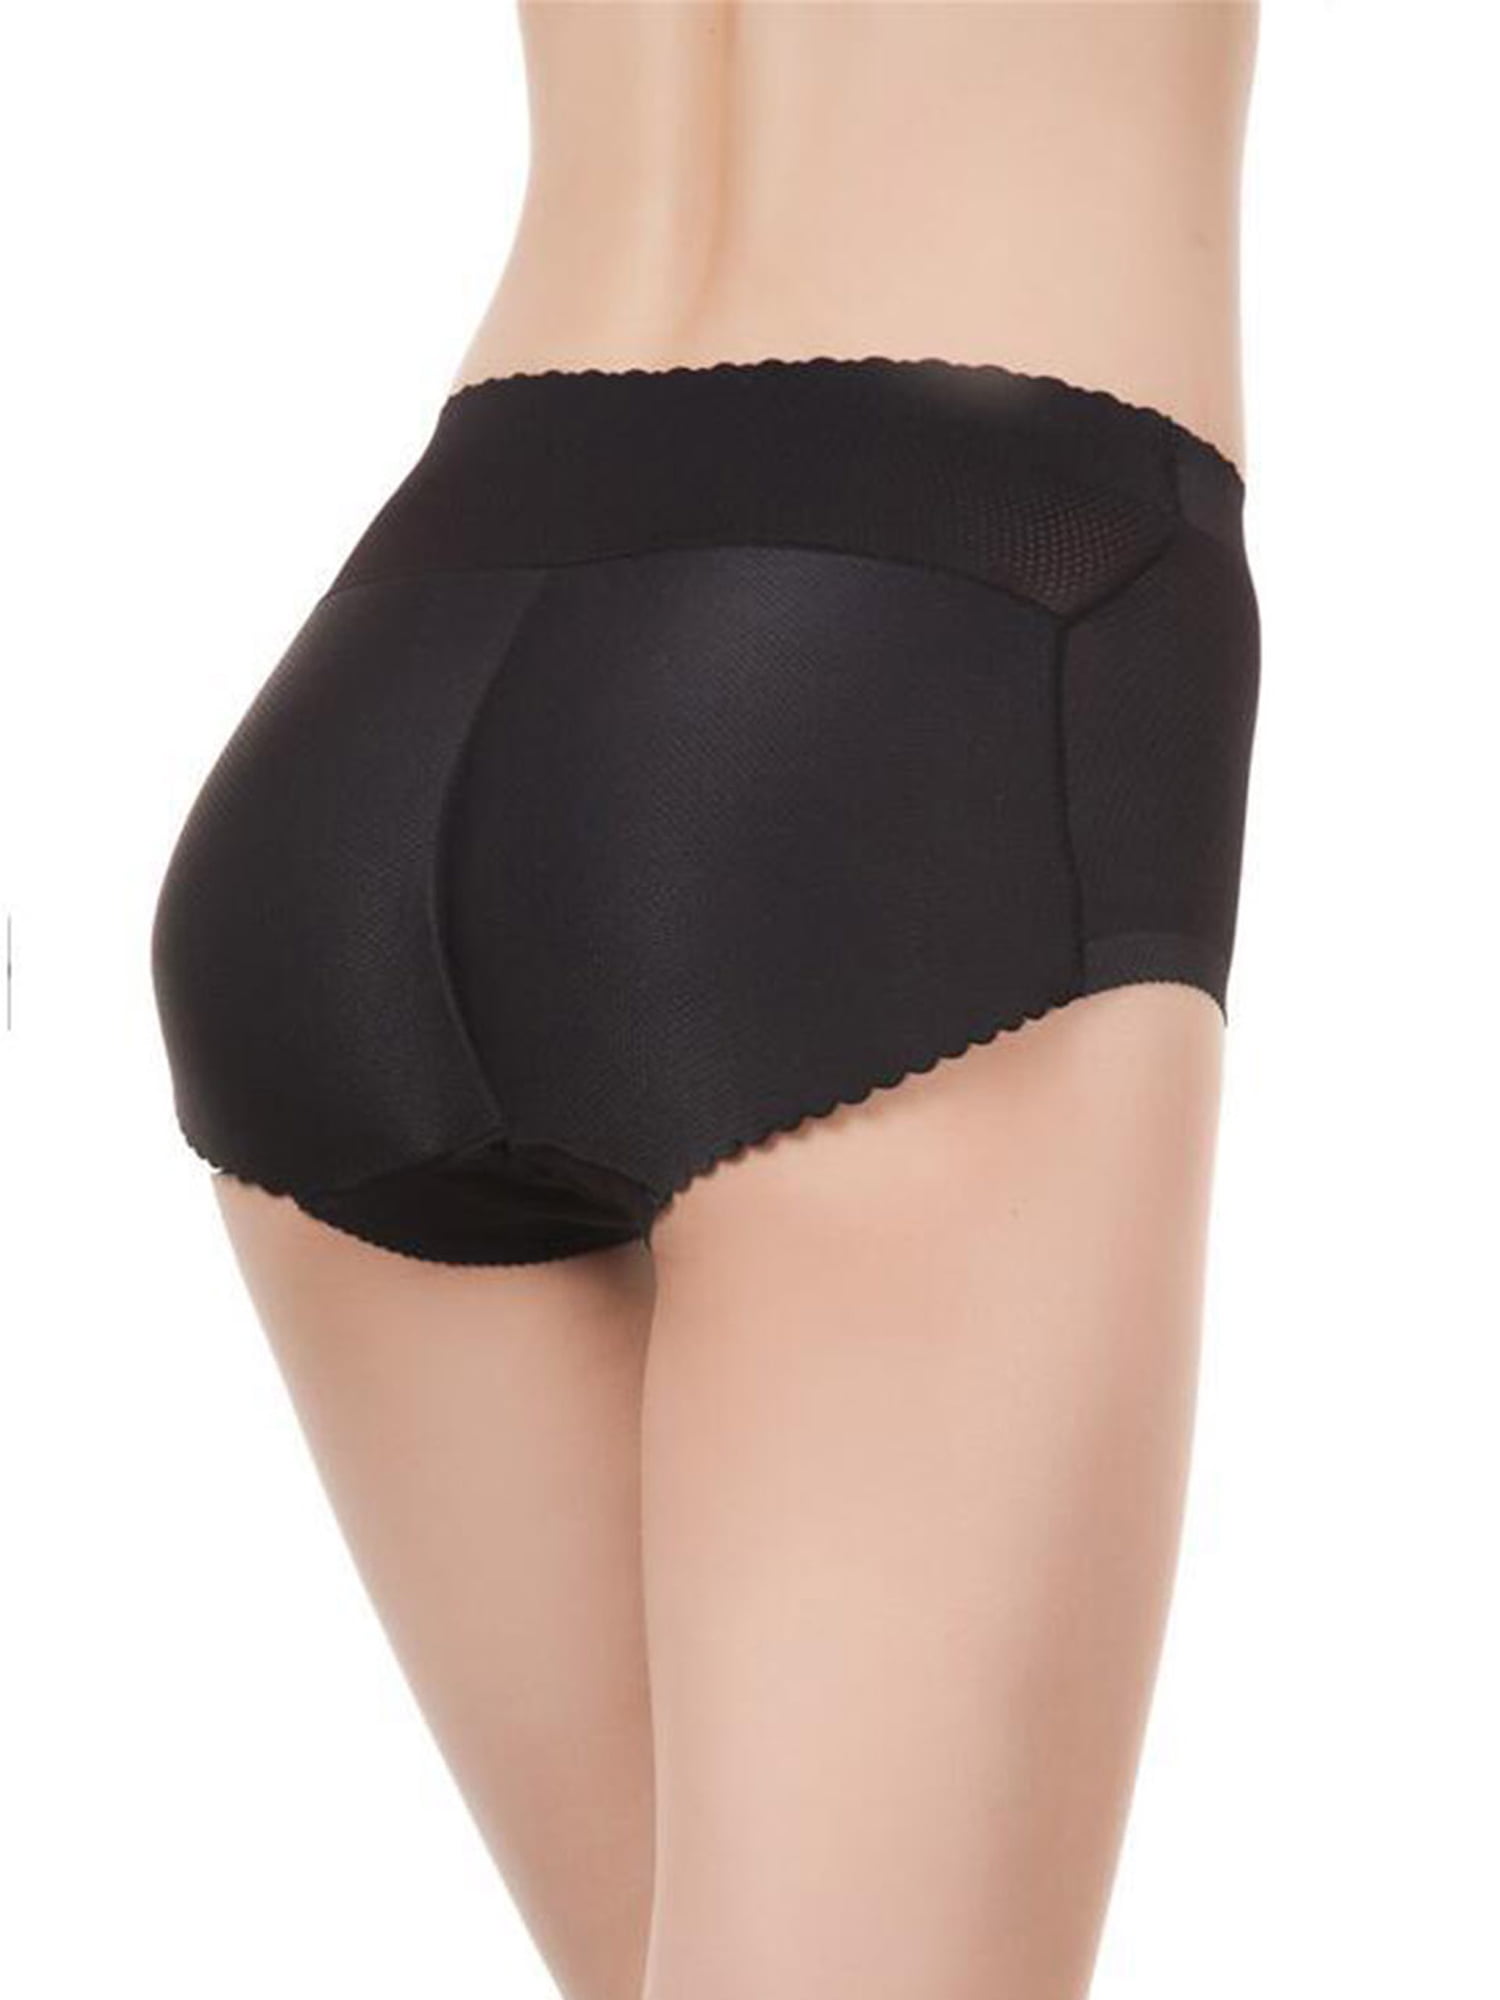 SEXYFROM Women Butt Lifter Body Shaper Tummy Control Panties Enhancer Underwear Booty Lace Shapewear Boy Shorts 